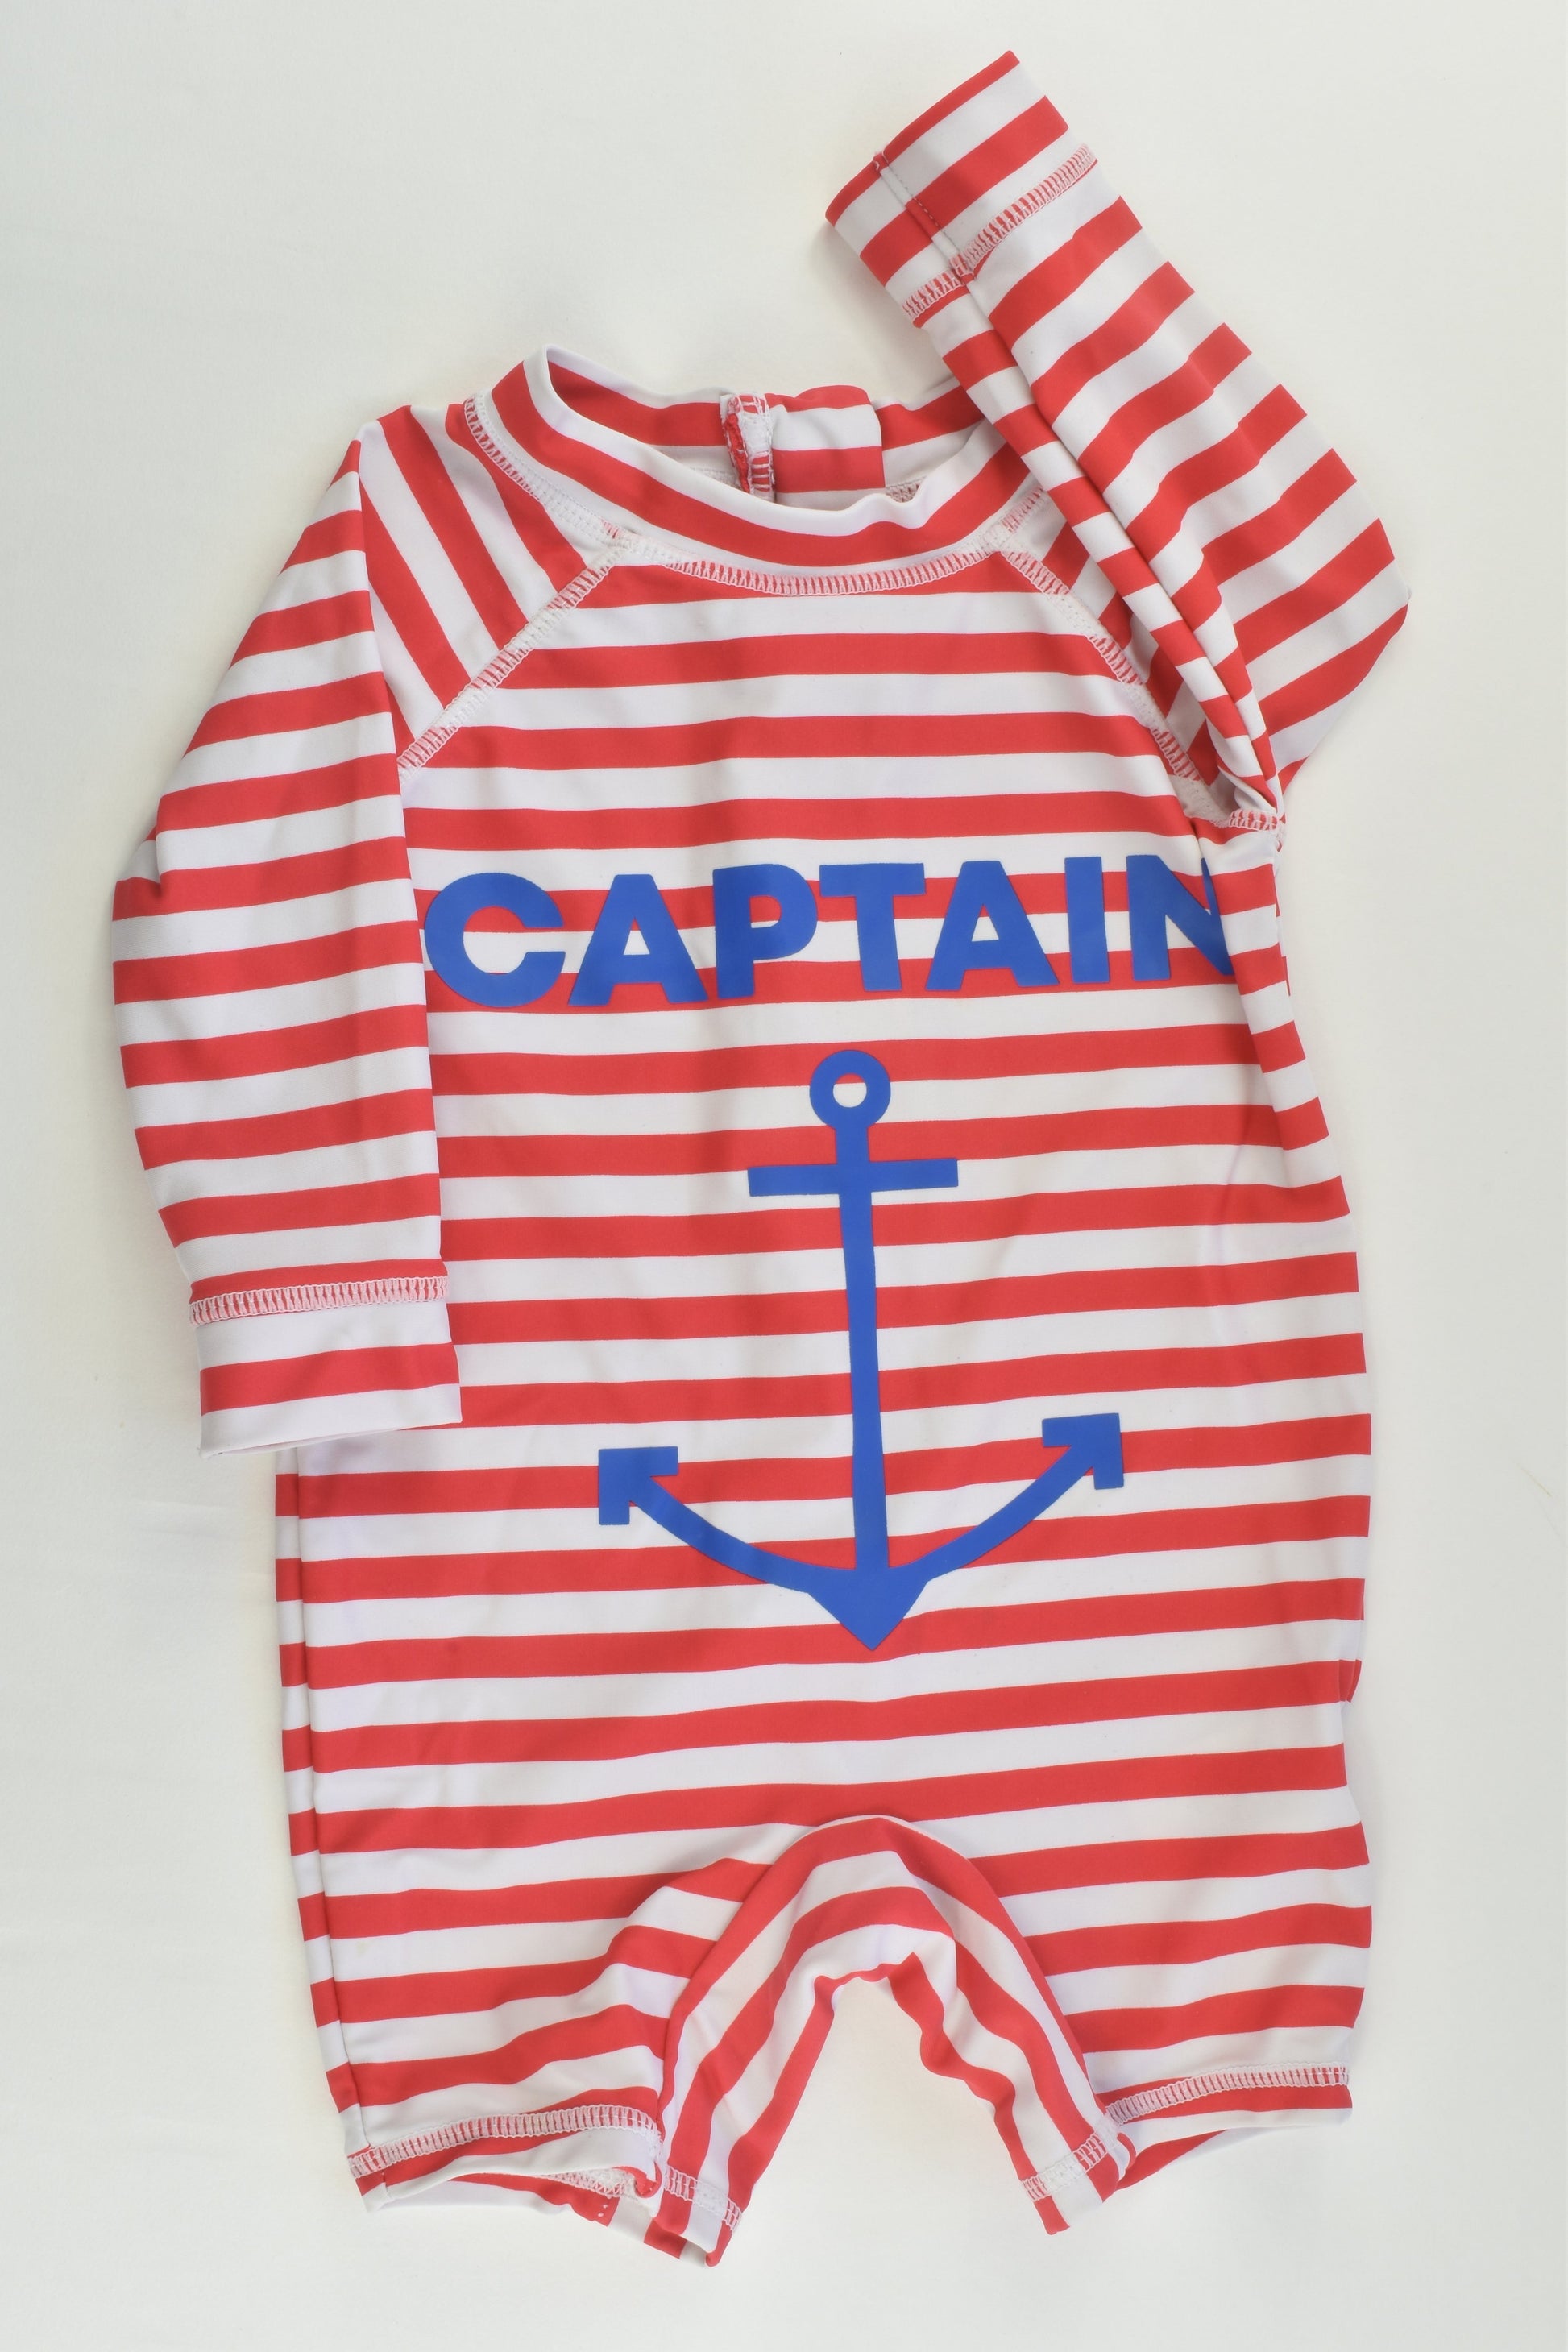 Cotton On Baby Size 0 (6-12 months) 'Captain' Rashie Suit